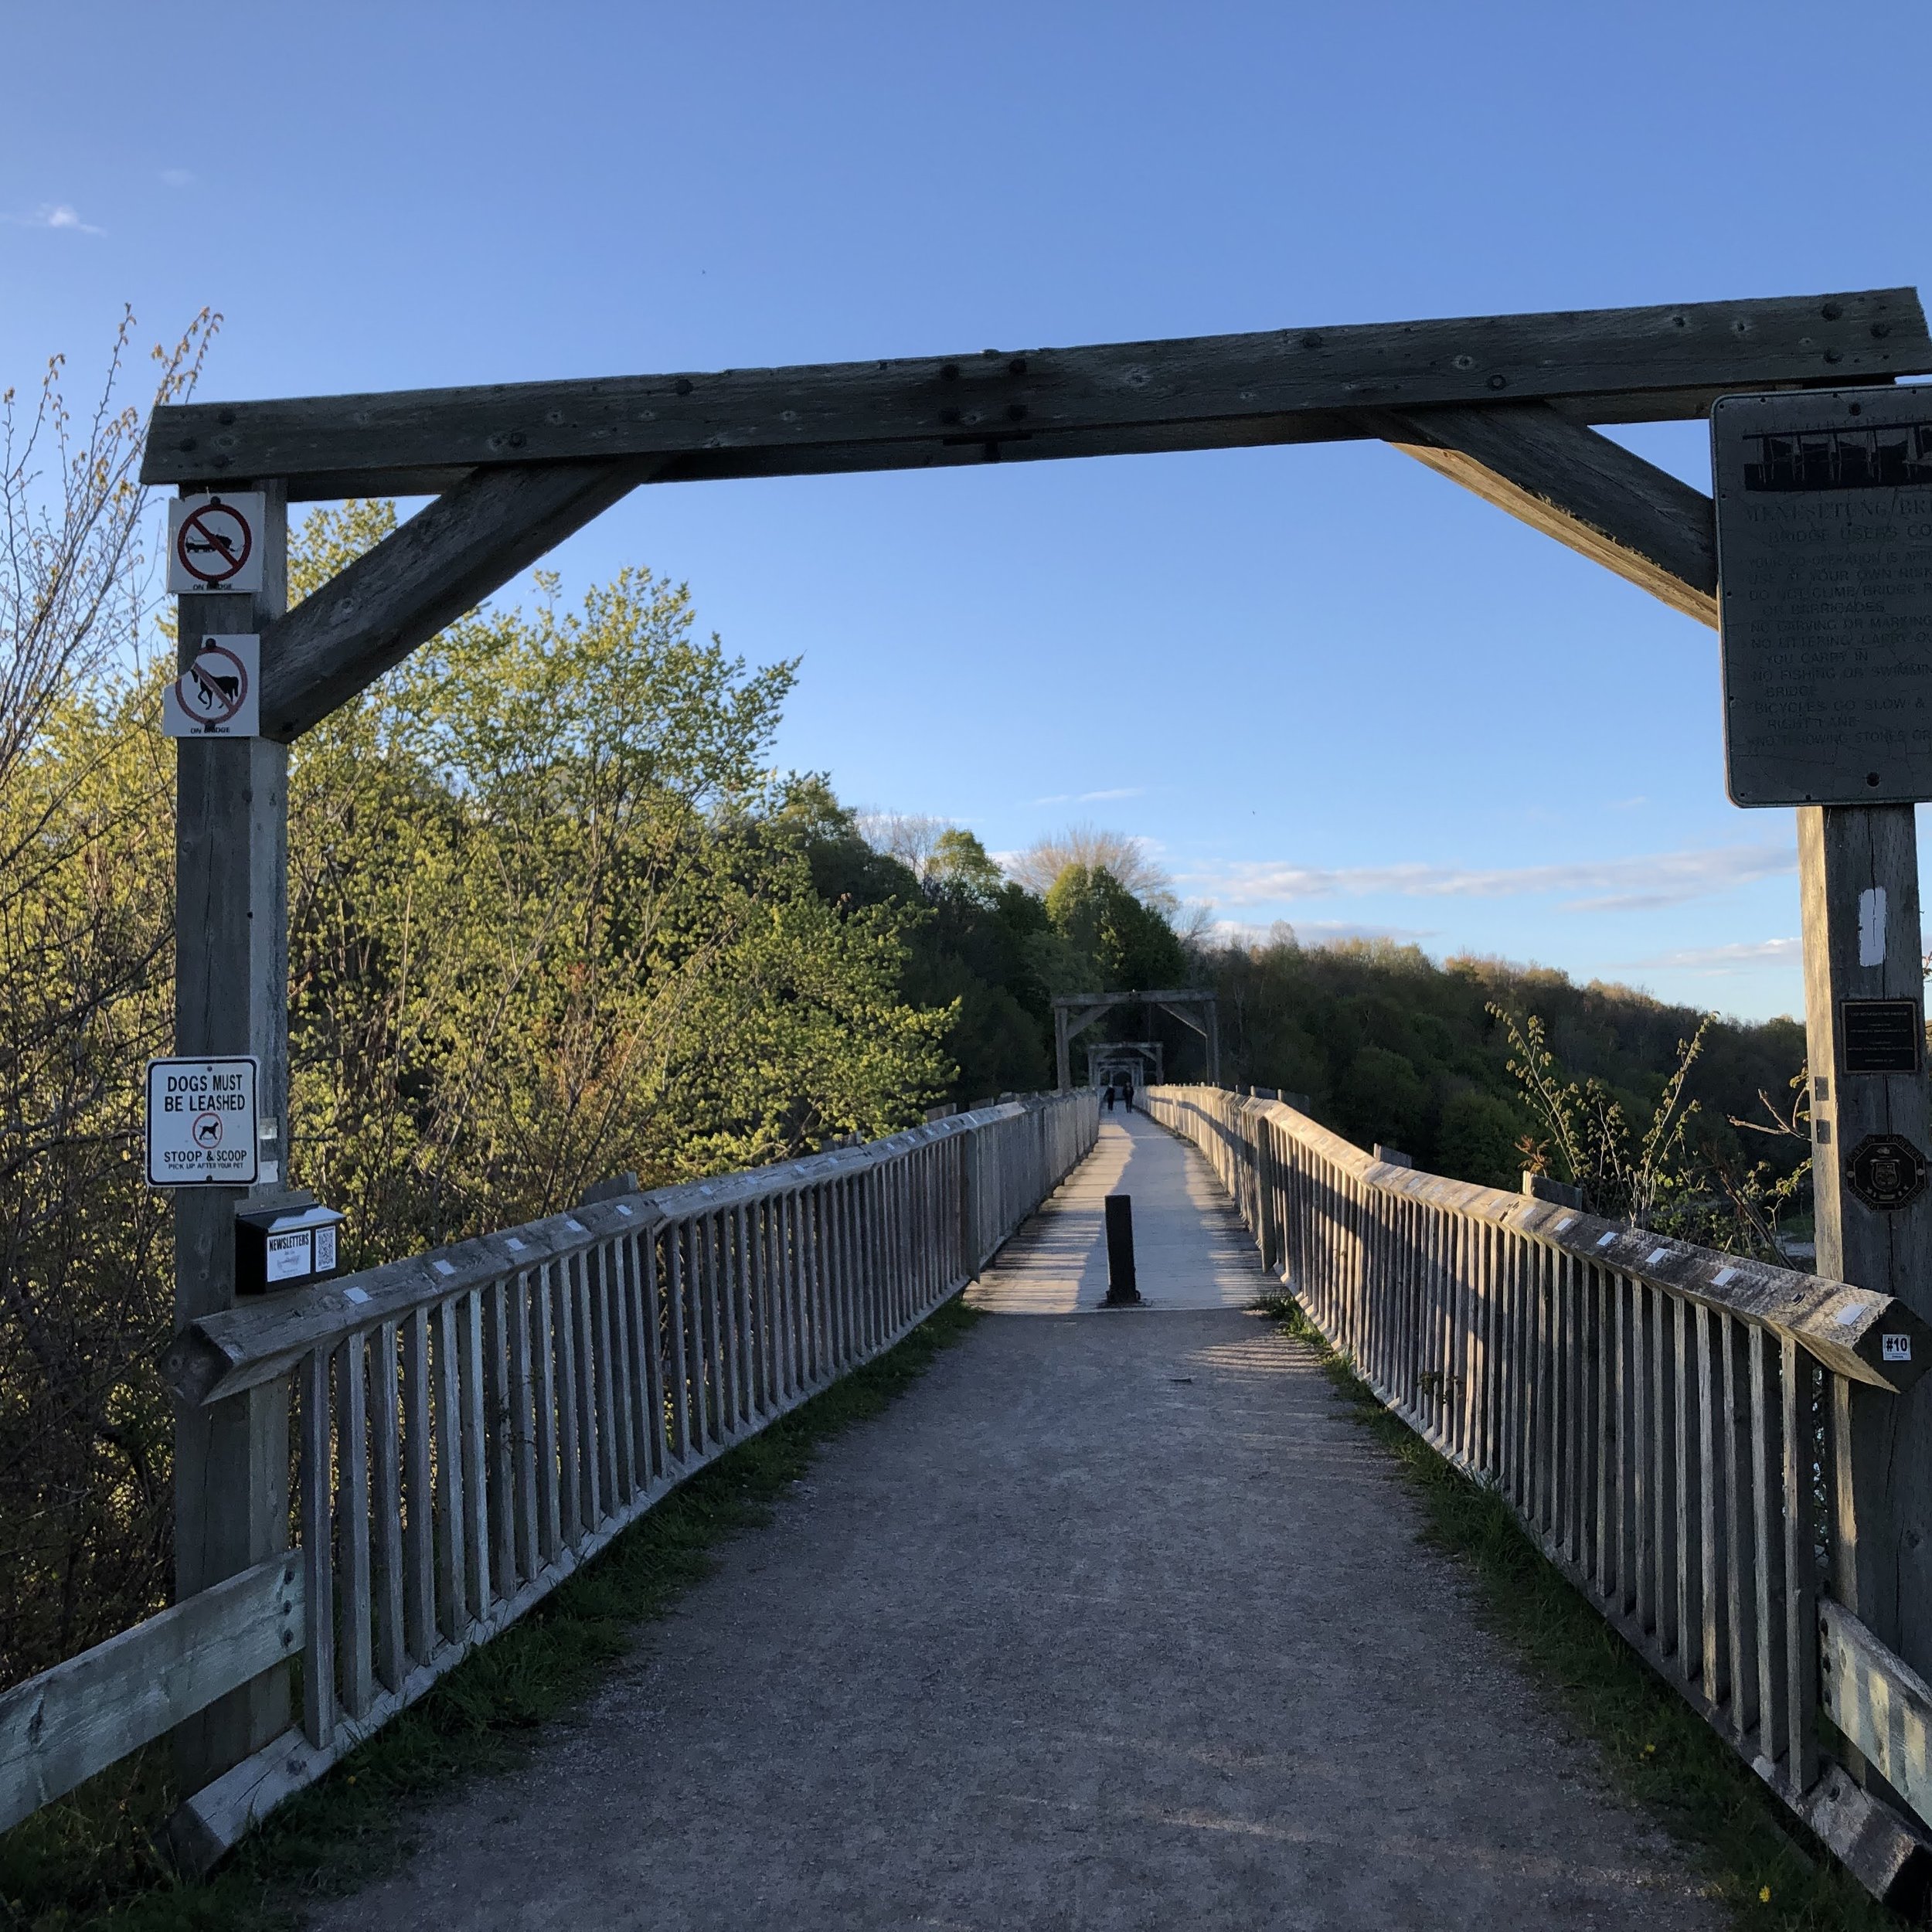 "Menesetung Bridge in Goderich, Ontario."